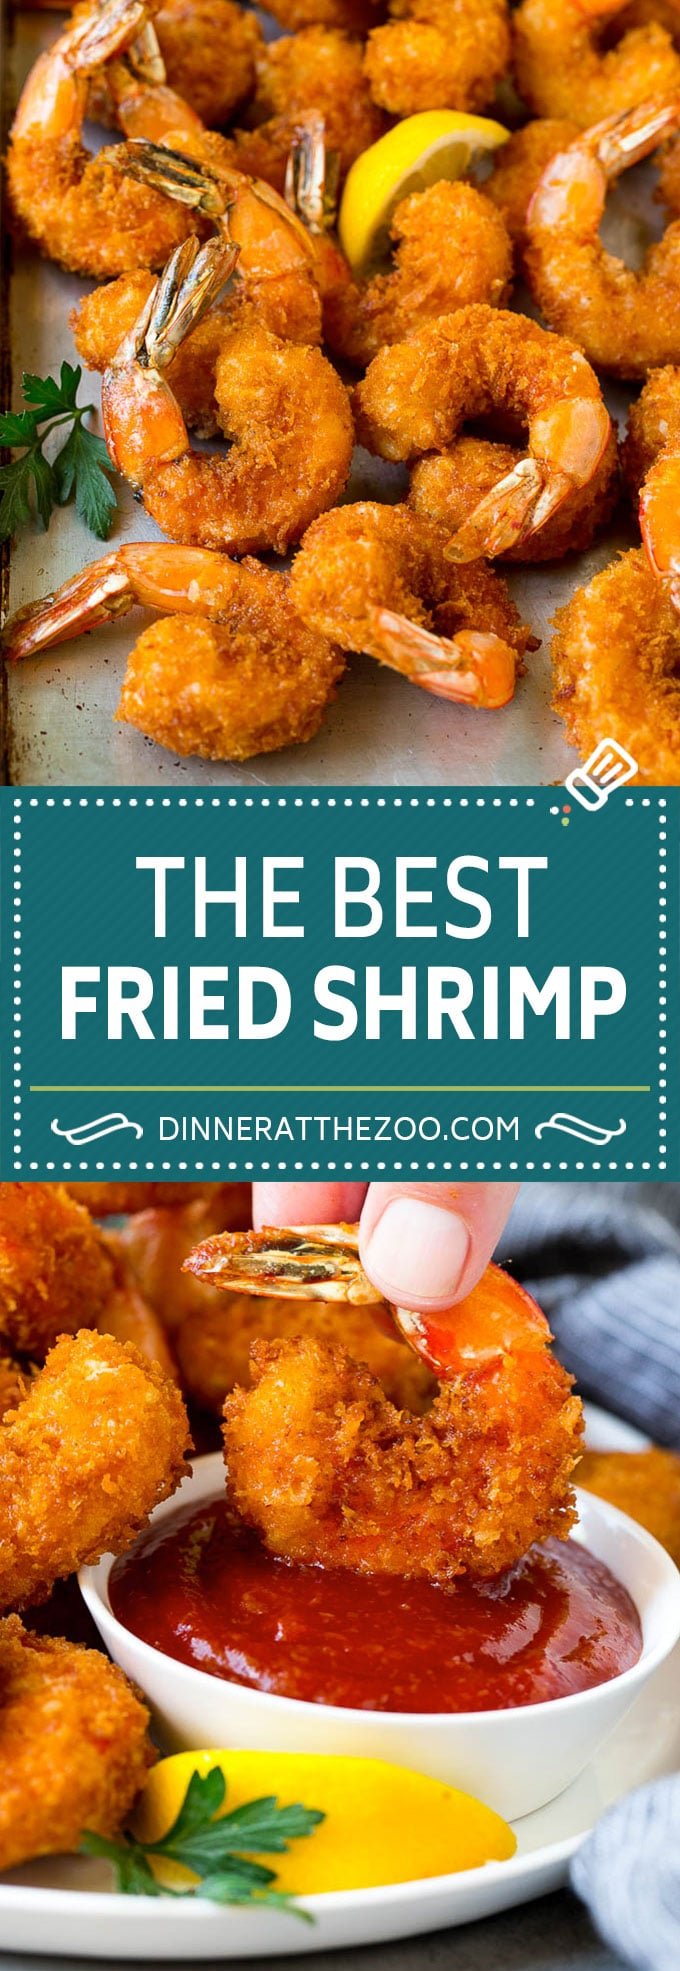 Fried Shrimp Recipe #shrimp #seafood #dinner #appetizer #dinneratthezoo